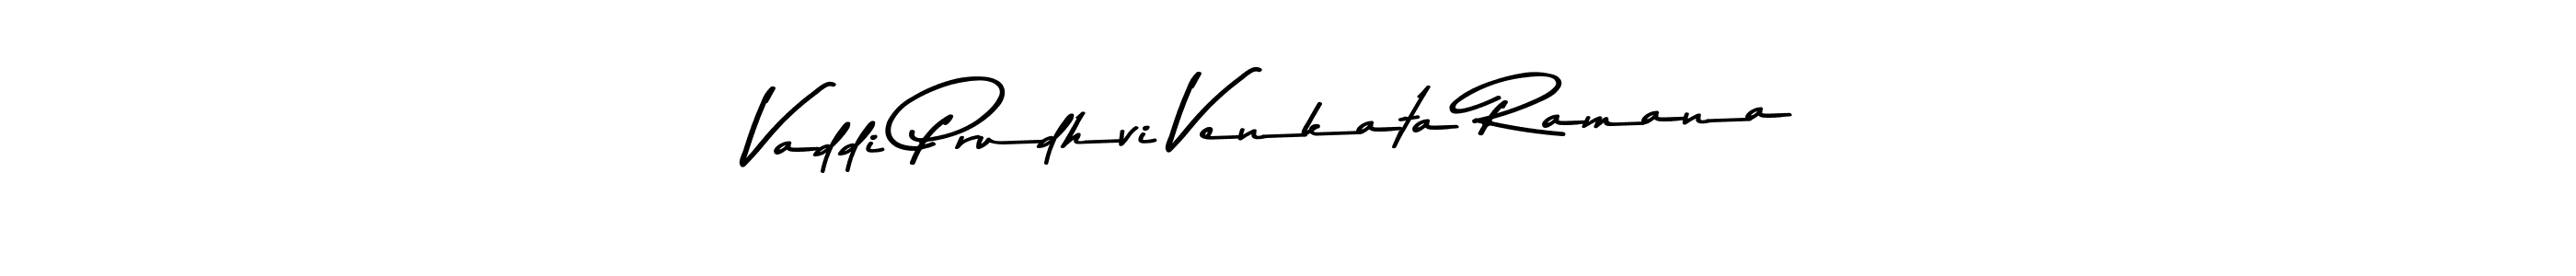 How to make Vaddi Prudhvi Venkata Ramana signature? Asem Kandis PERSONAL USE is a professional autograph style. Create handwritten signature for Vaddi Prudhvi Venkata Ramana name. Vaddi Prudhvi Venkata Ramana signature style 9 images and pictures png